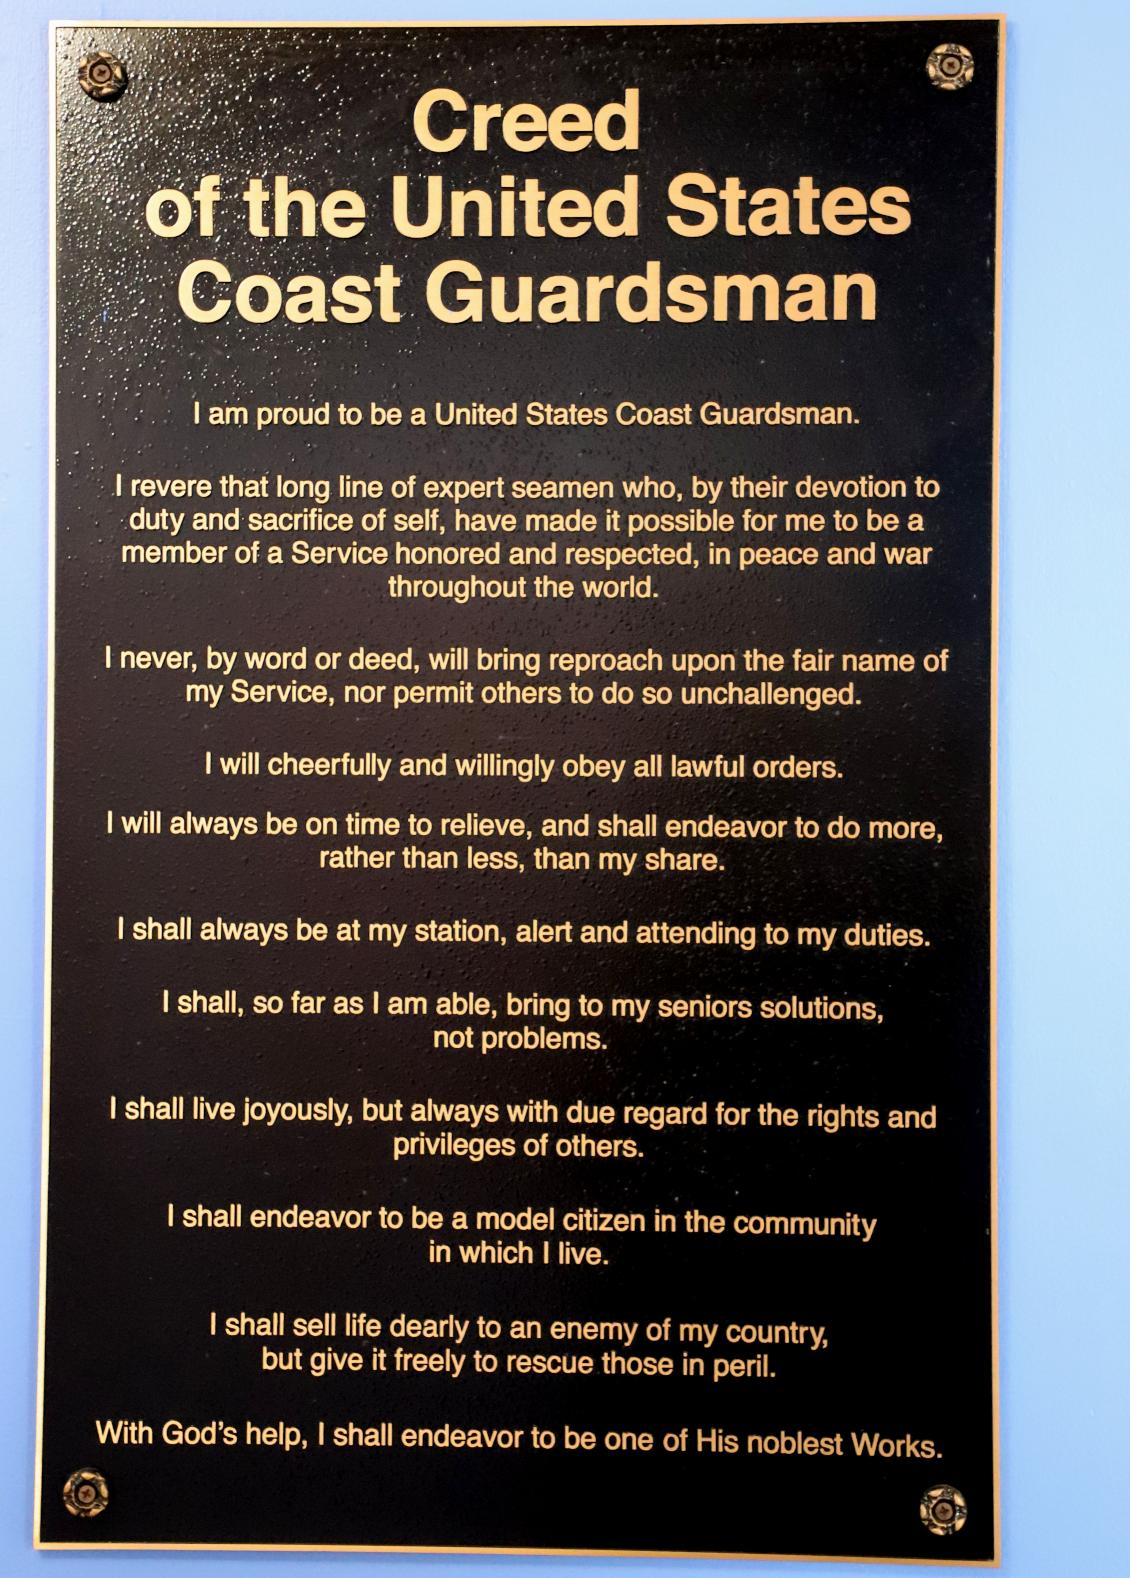 U.S. Coast Guard Academy - Coast Guard Creed